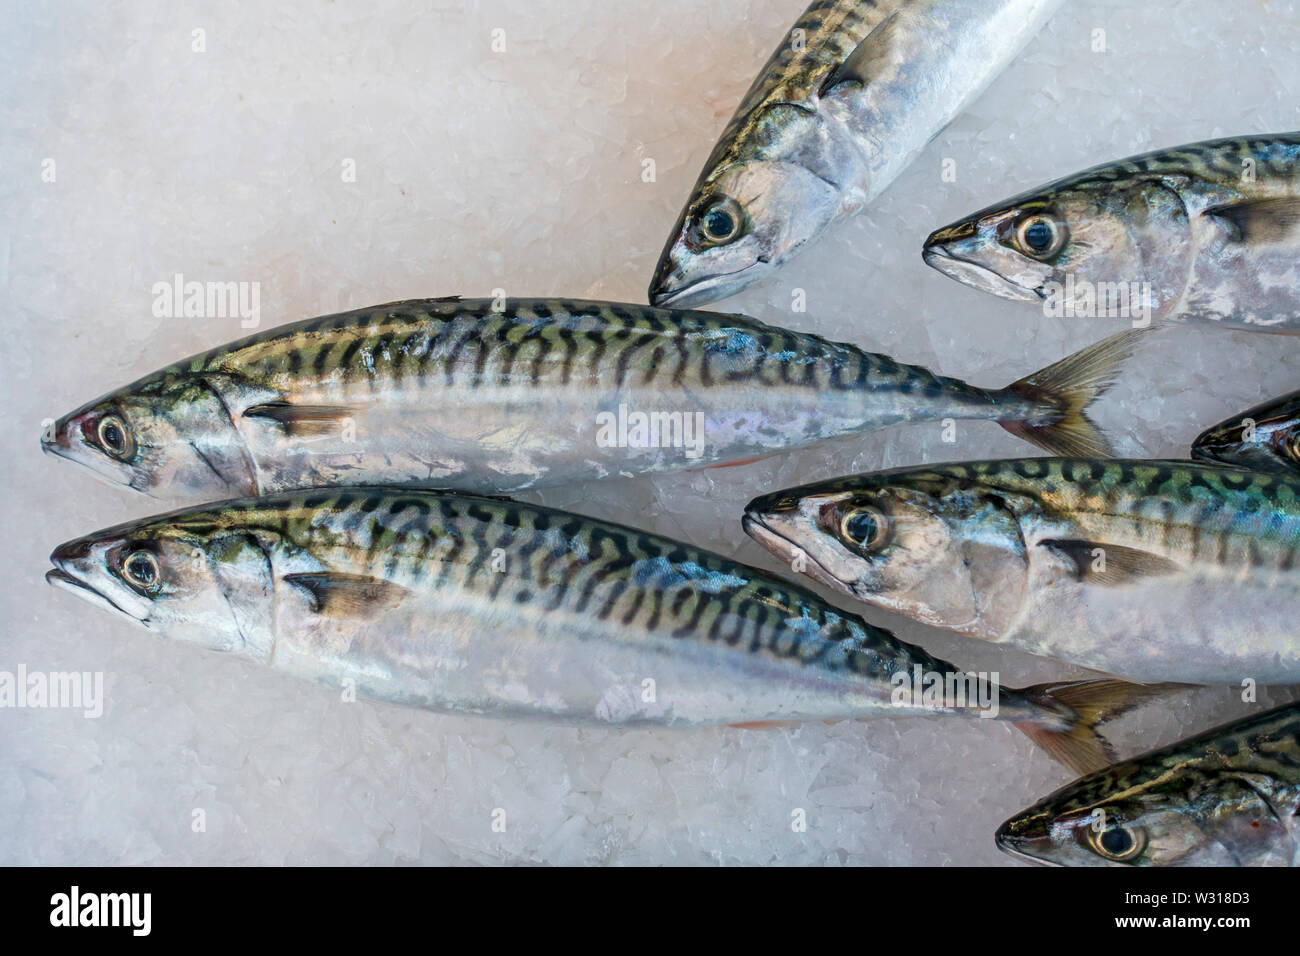 Makrele/Norwegisch/schottischen Makrele Makrele (Scomber scombrus) Fische auf Eis auf Anzeige in Fish shop/Fischmarkt Stockfoto